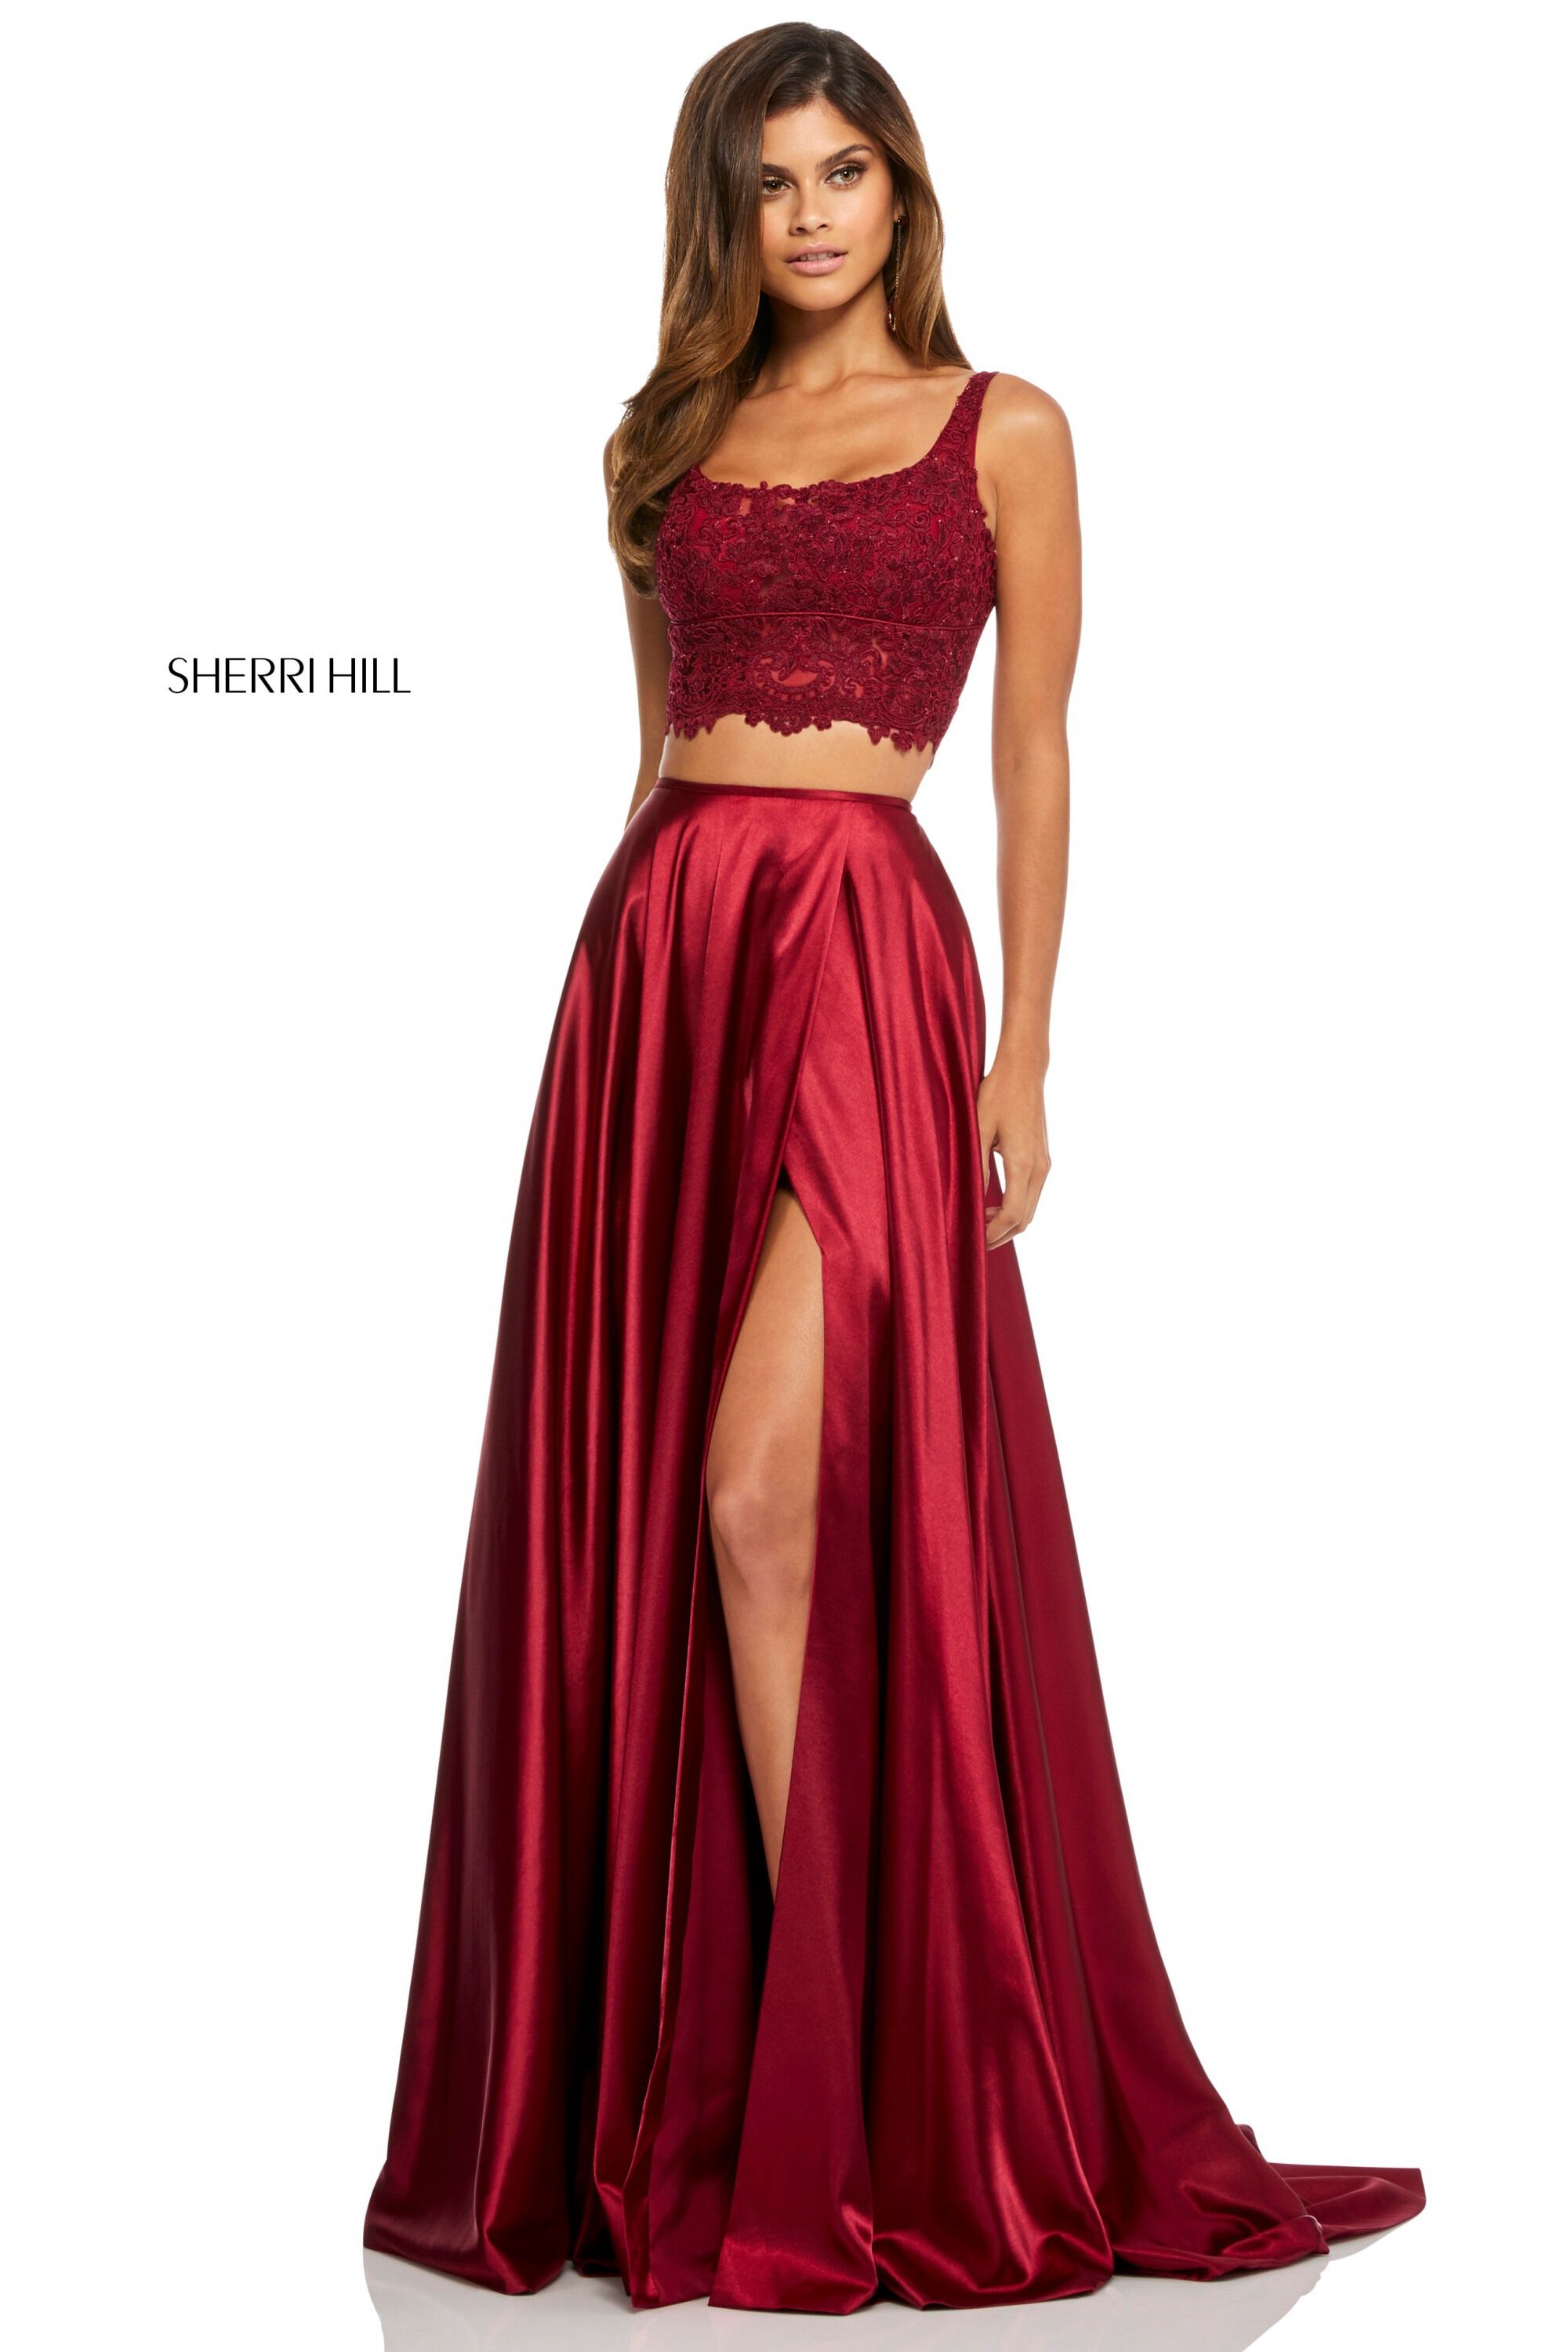 sherri hill red floral dress